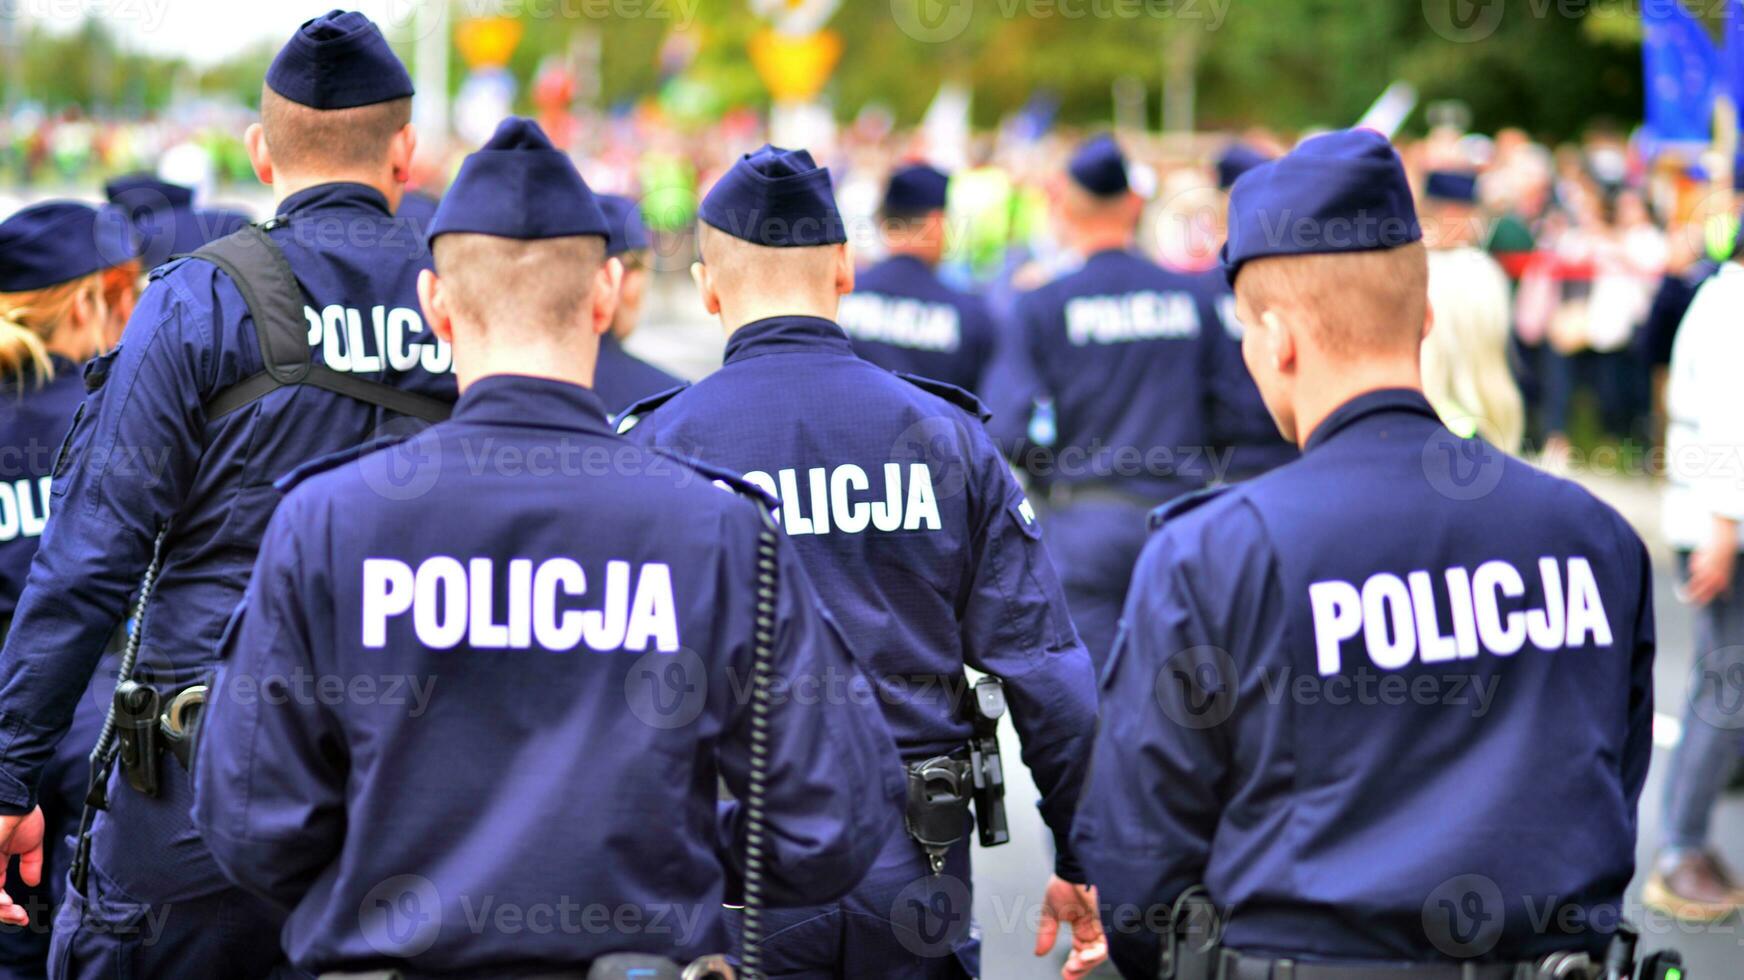 Police sign - logo on the back of the police uniform. Policja. photo